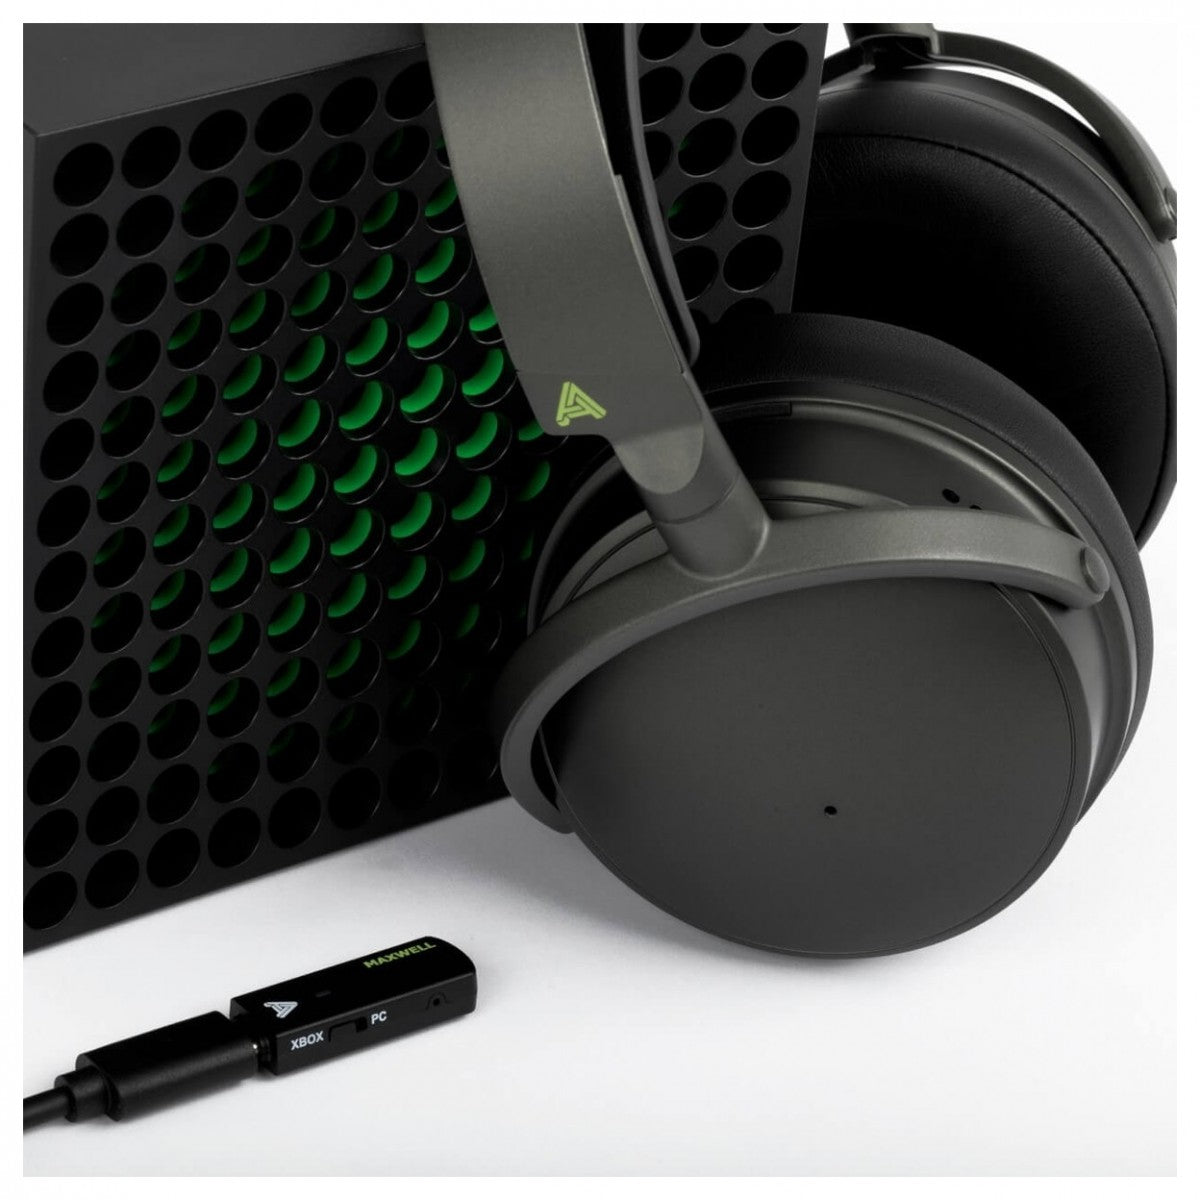 Audeze Maxwell Xbox Wireless Gaming Headset